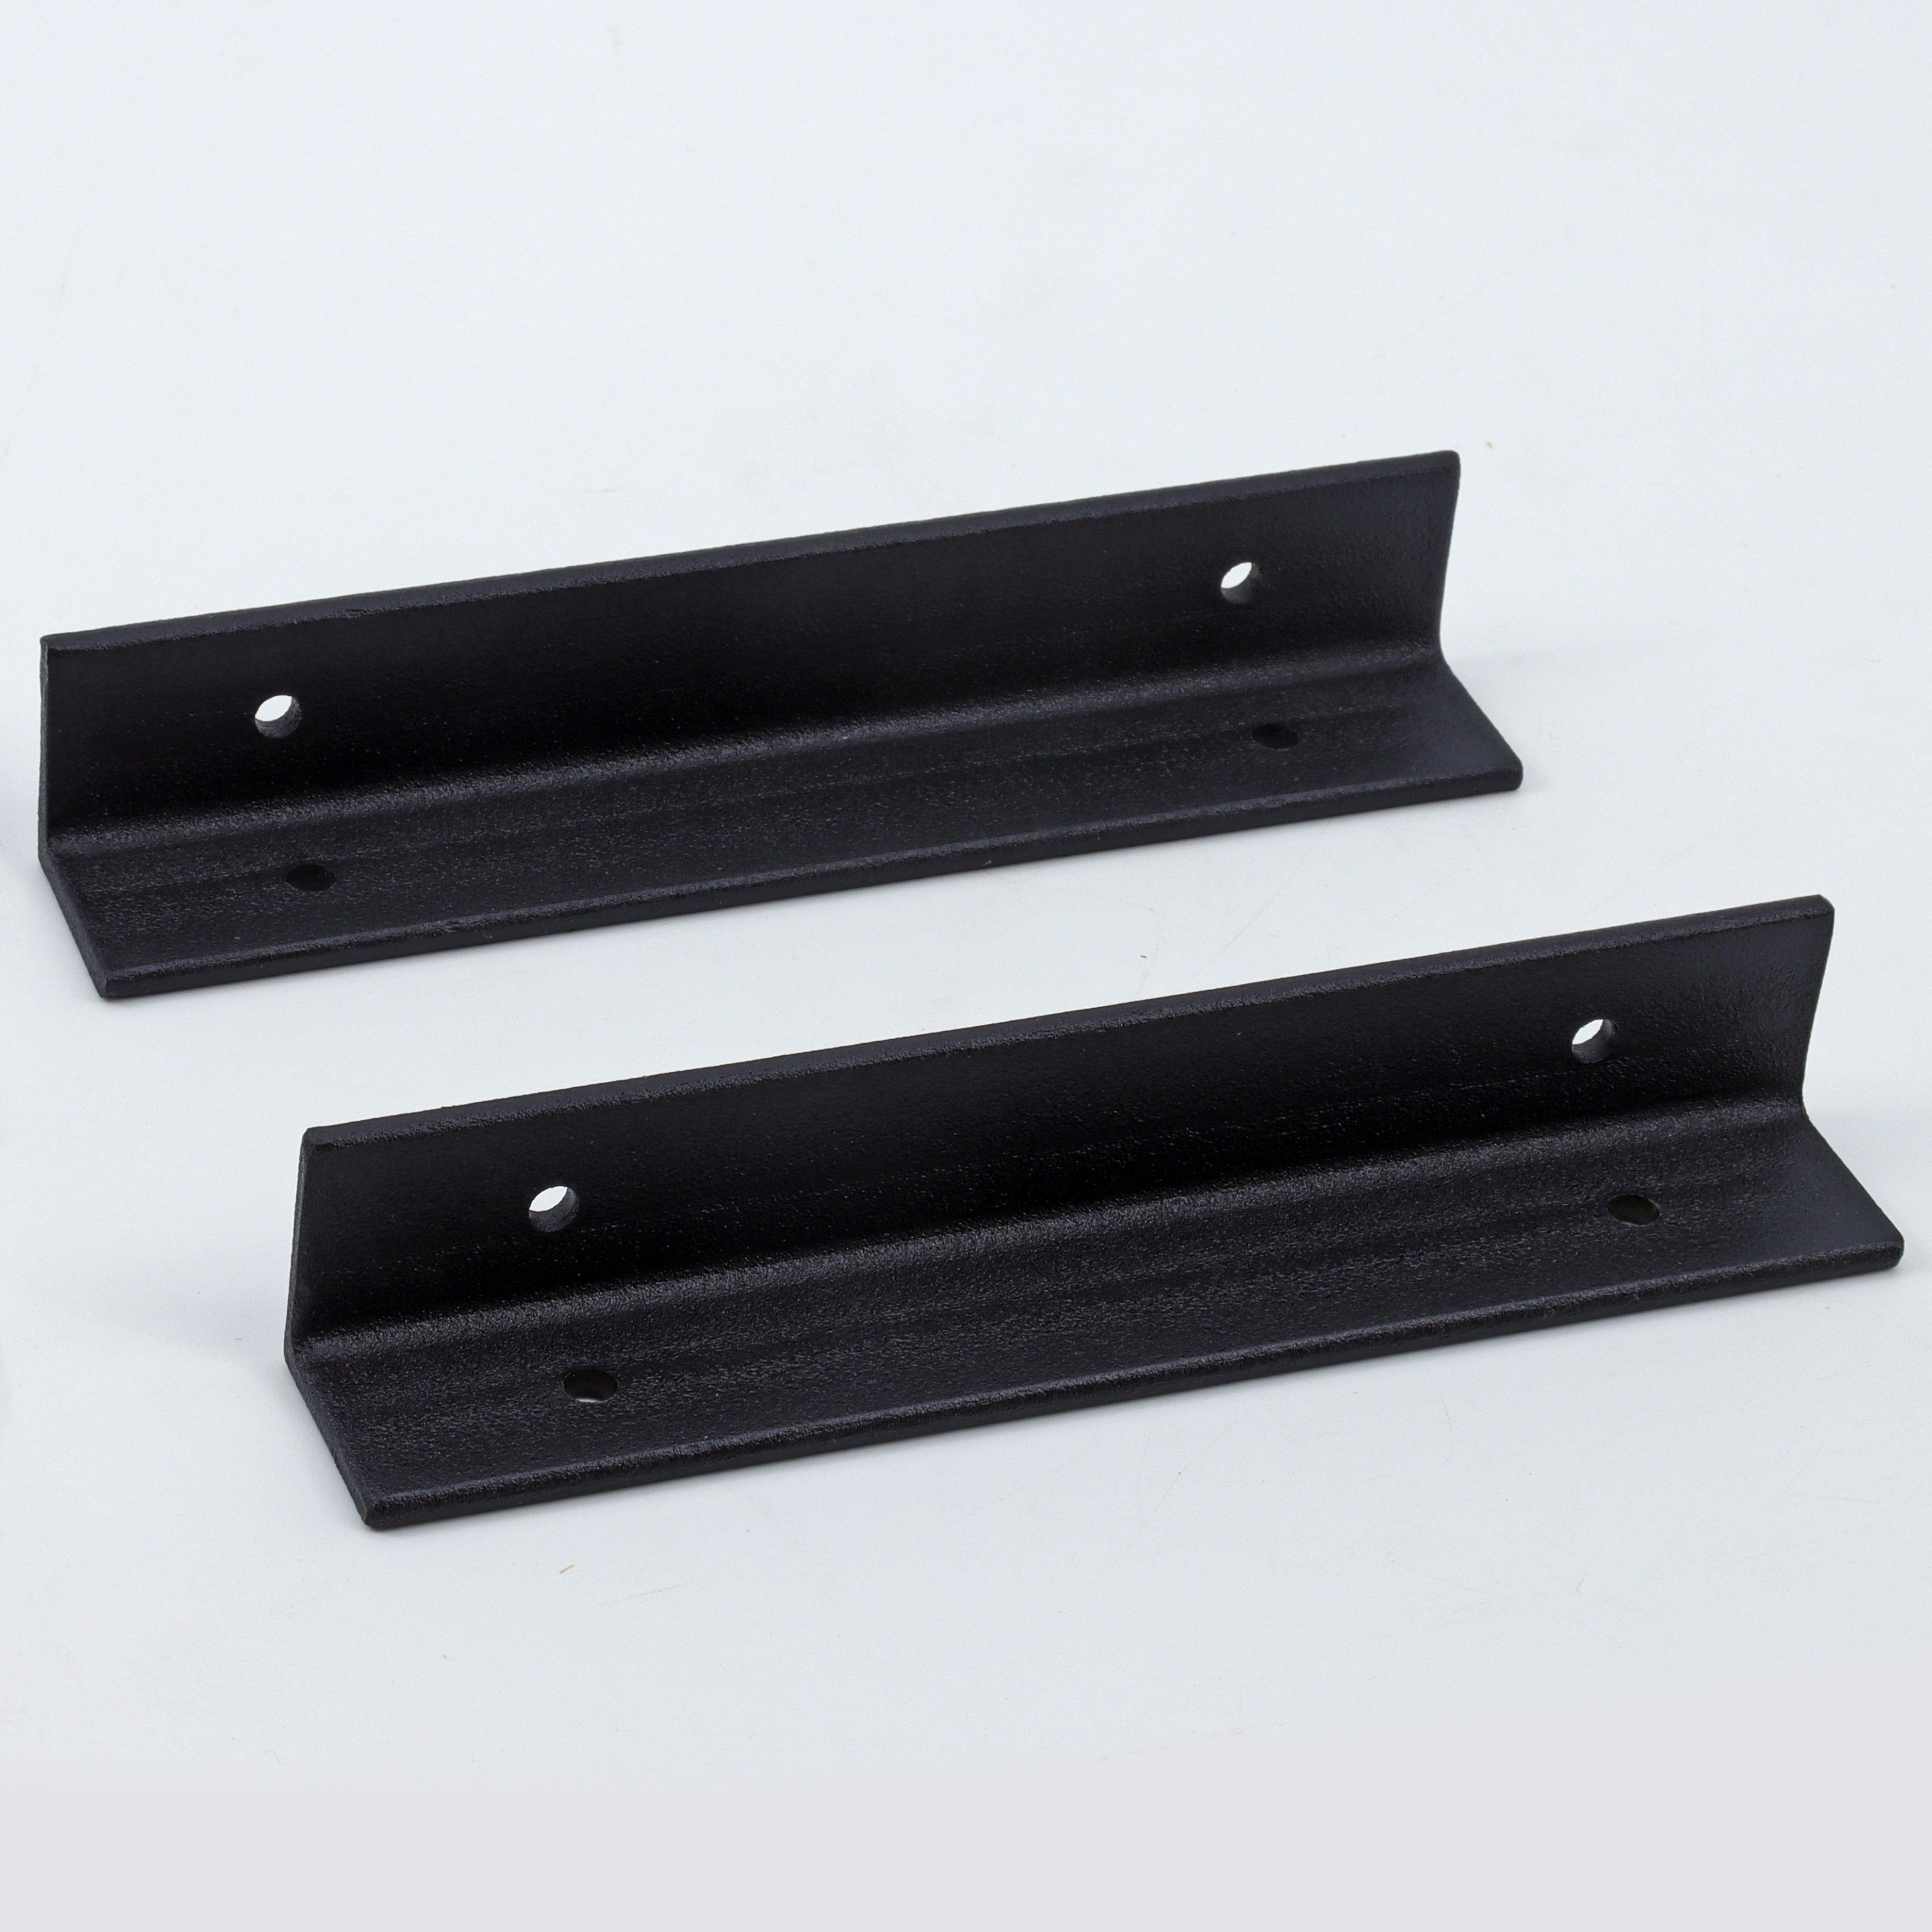 Black Alcove Shelf Brackets for 200mm depth shelves (Pair)